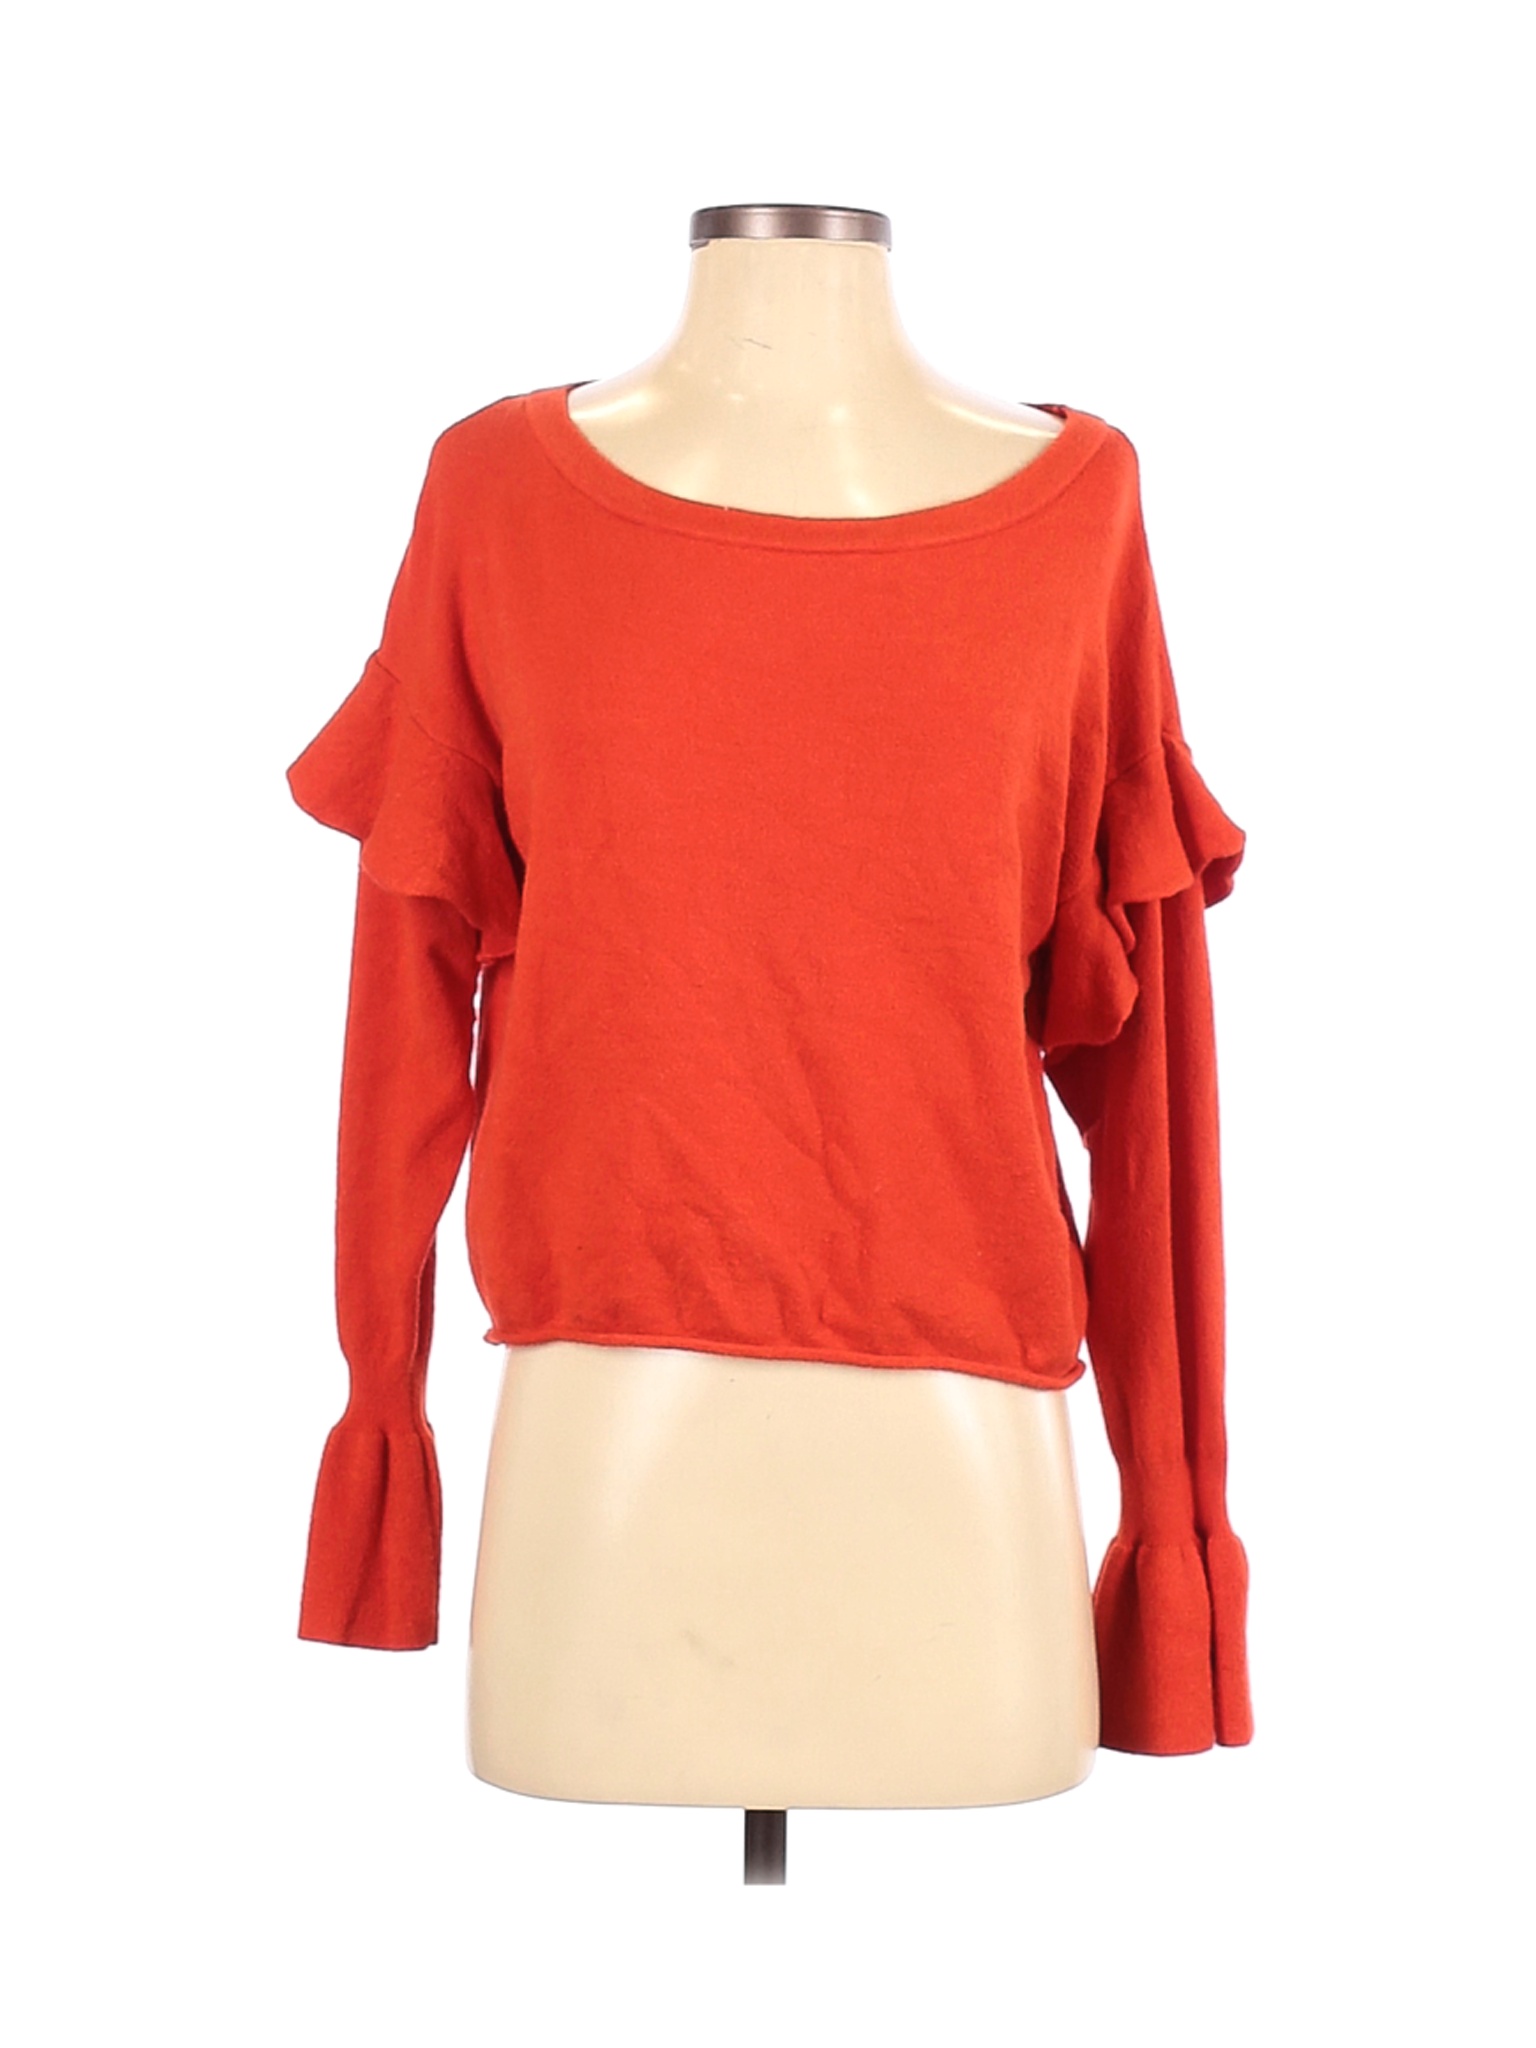 Zara Women Orange Pullover Sweater S | eBay